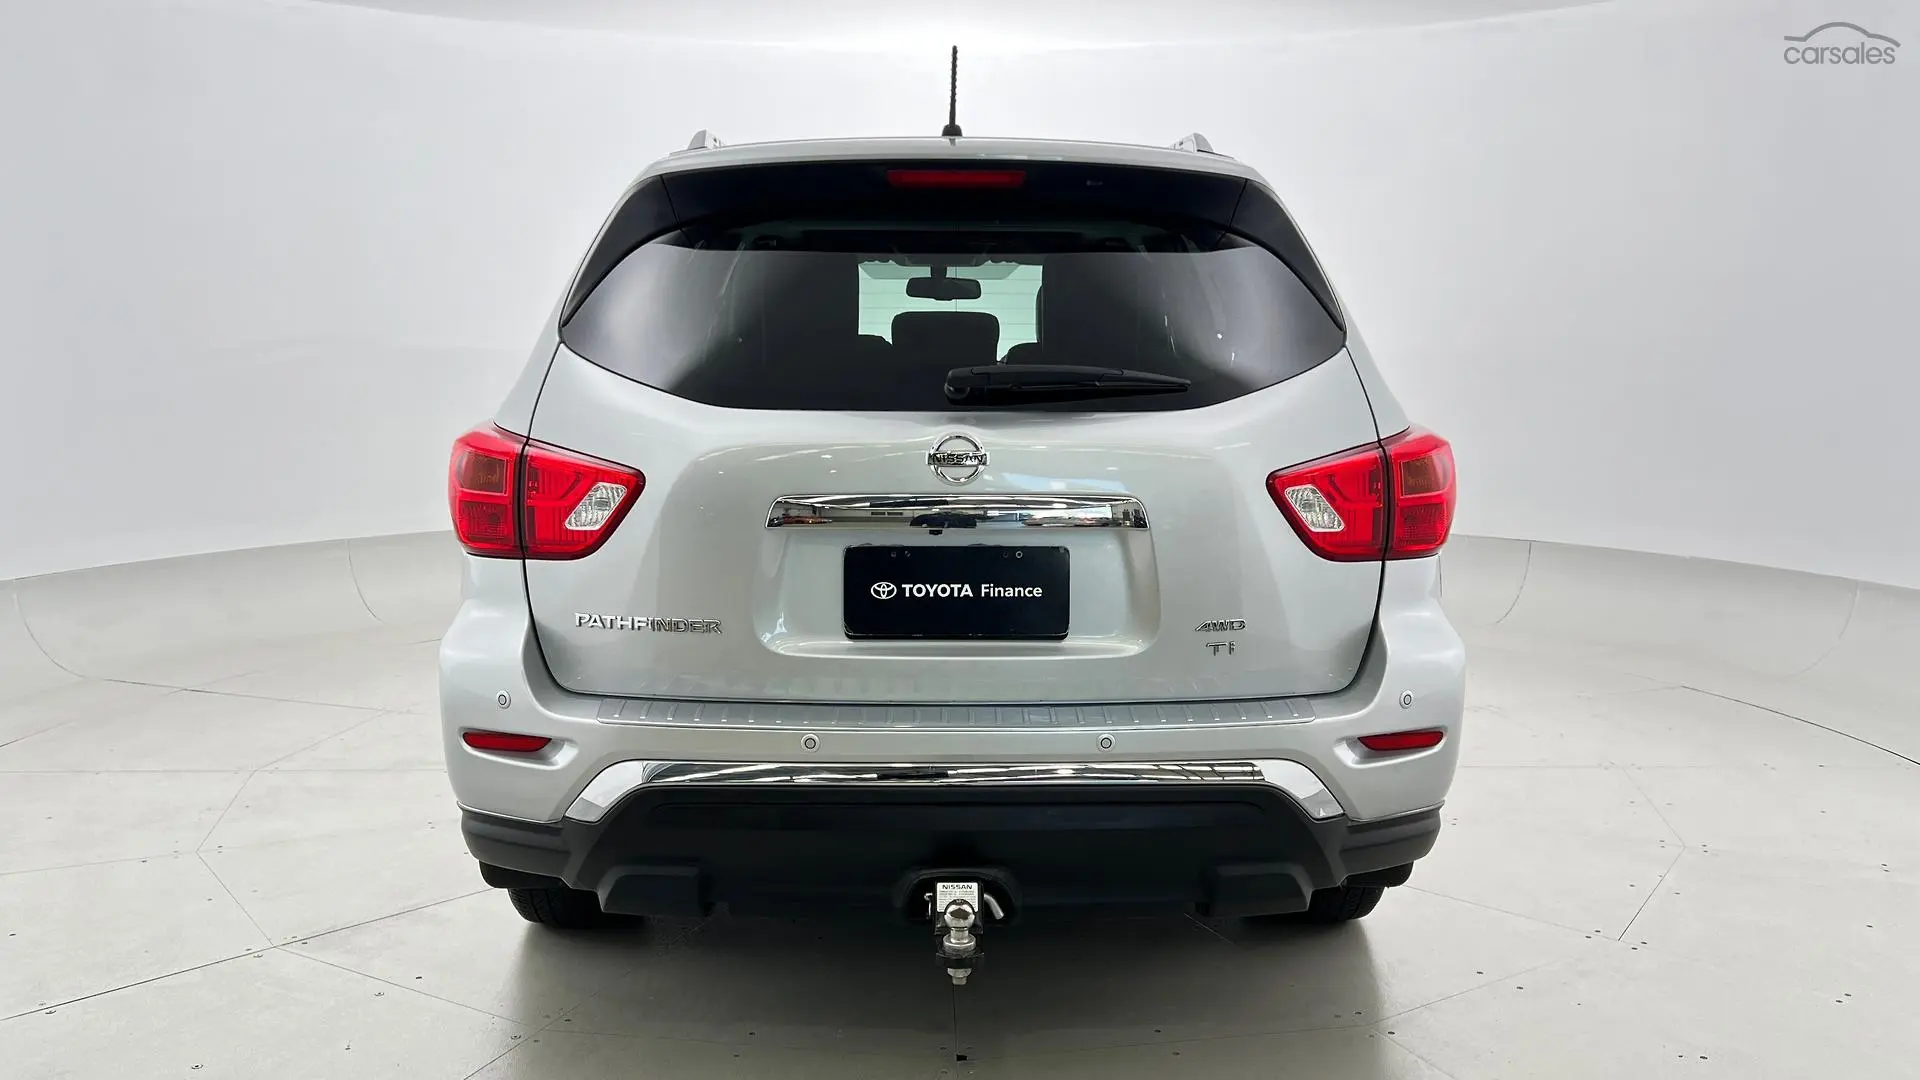 2019 Nissan Pathfinder Image 6